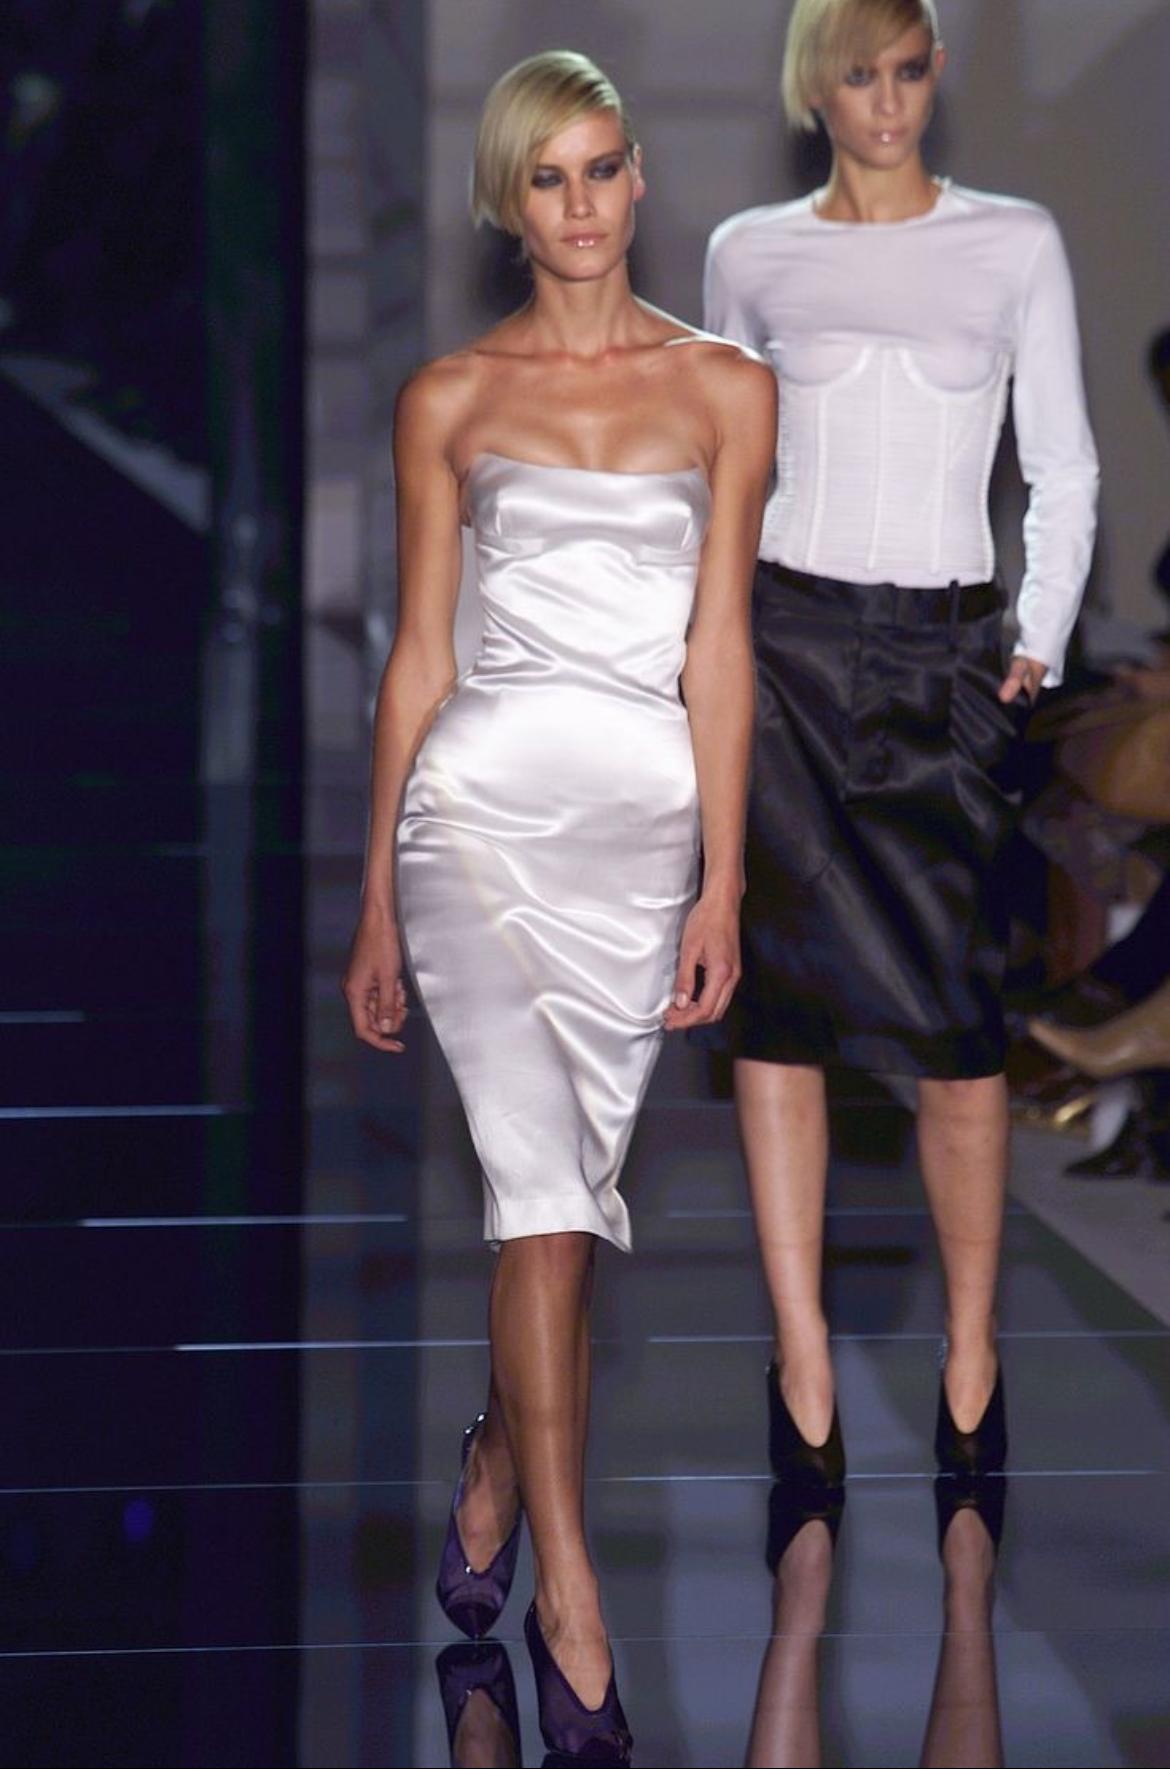 NWT S/S 2001 Gucci by Tom Ford Runway Ad Corset White Silk Satin Strapless Dress (Robe bustier en satin de soie blanche) Excellent état - En vente à West Hollywood, CA